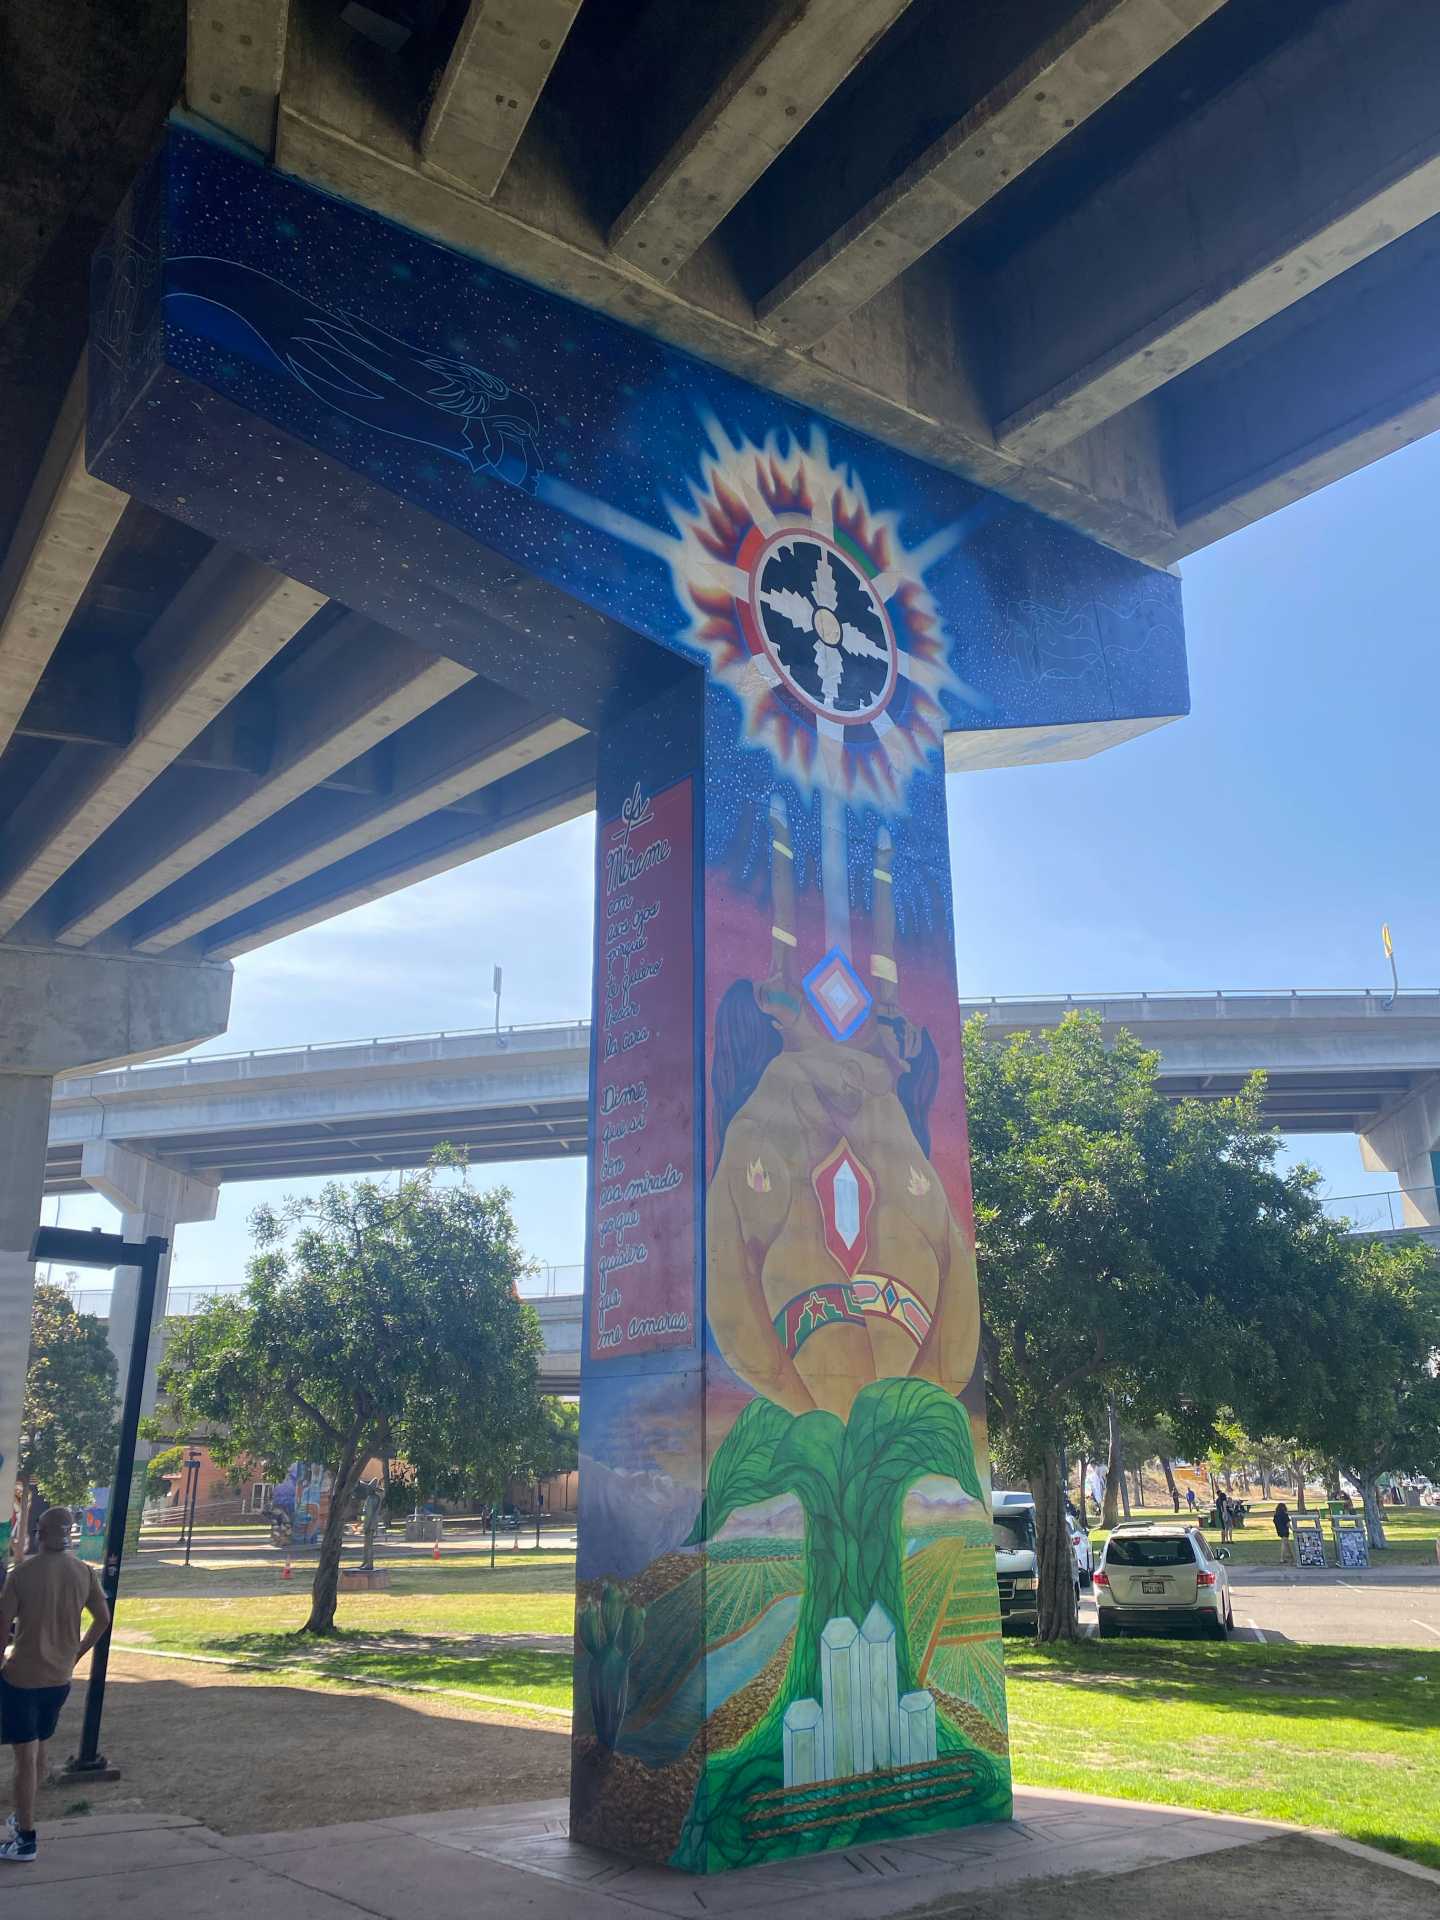 A mural in Chicano Park, San Diego, California